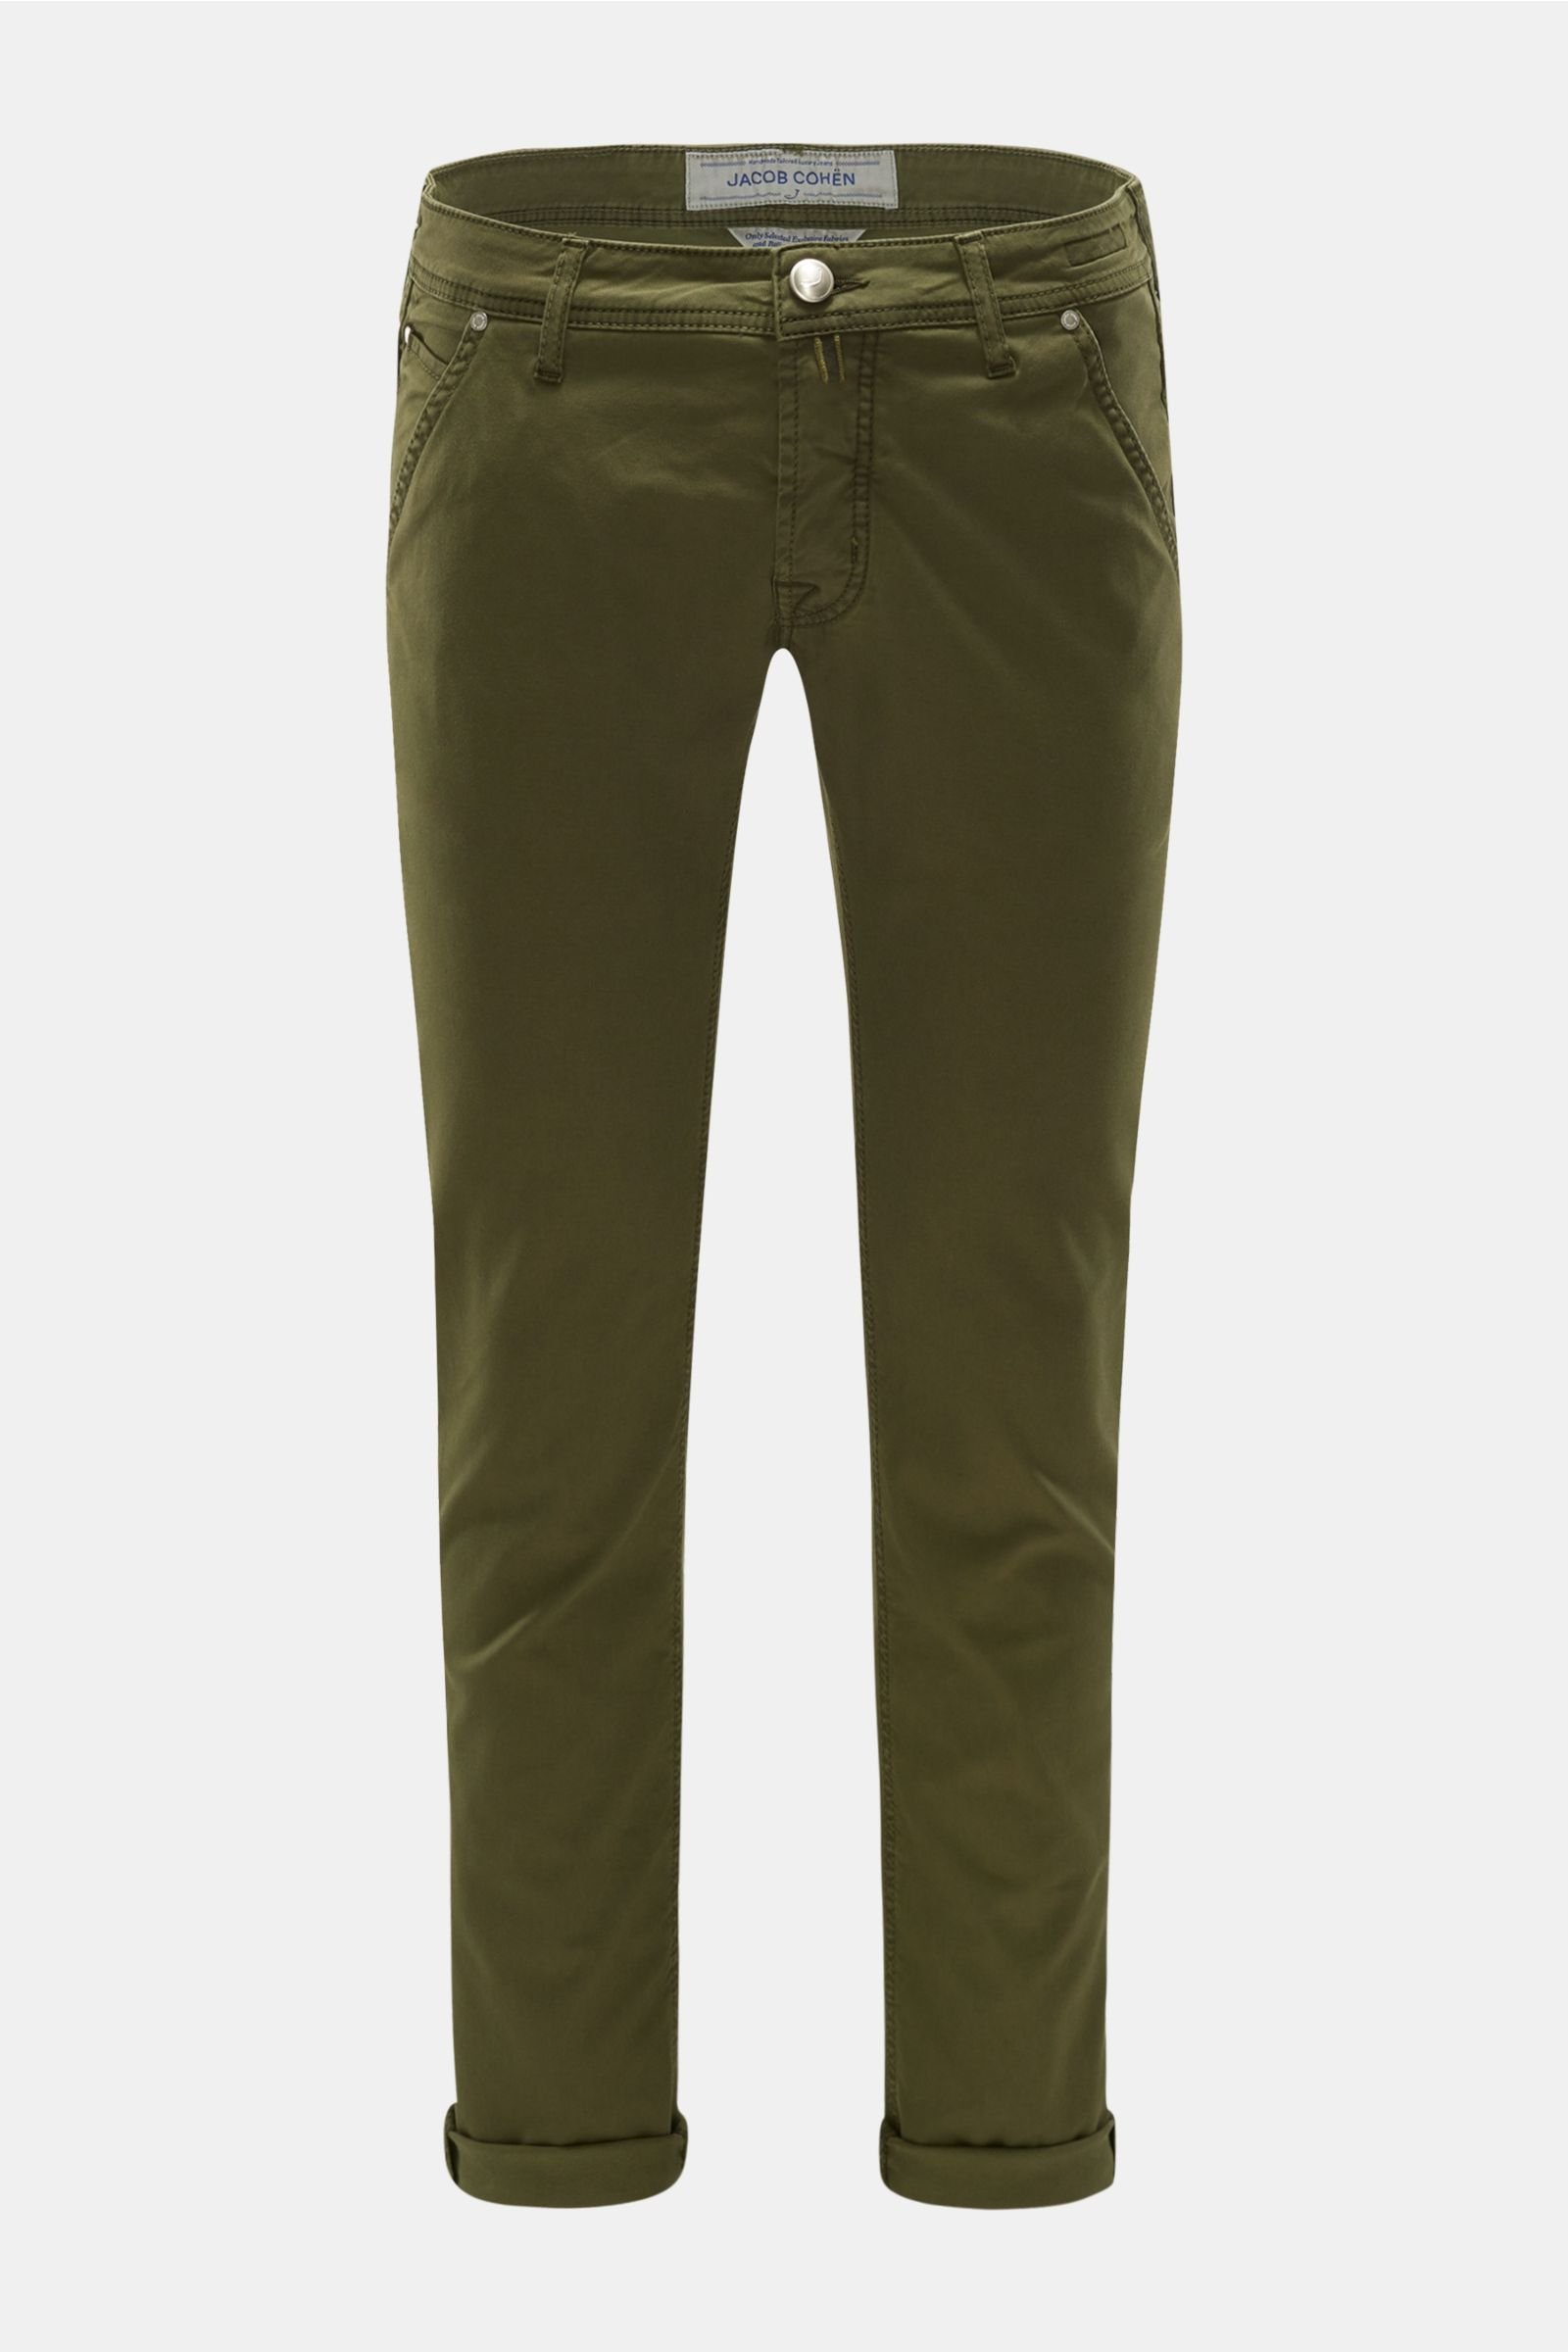 Trousers 'J613 Comfort Slim Fit' olive